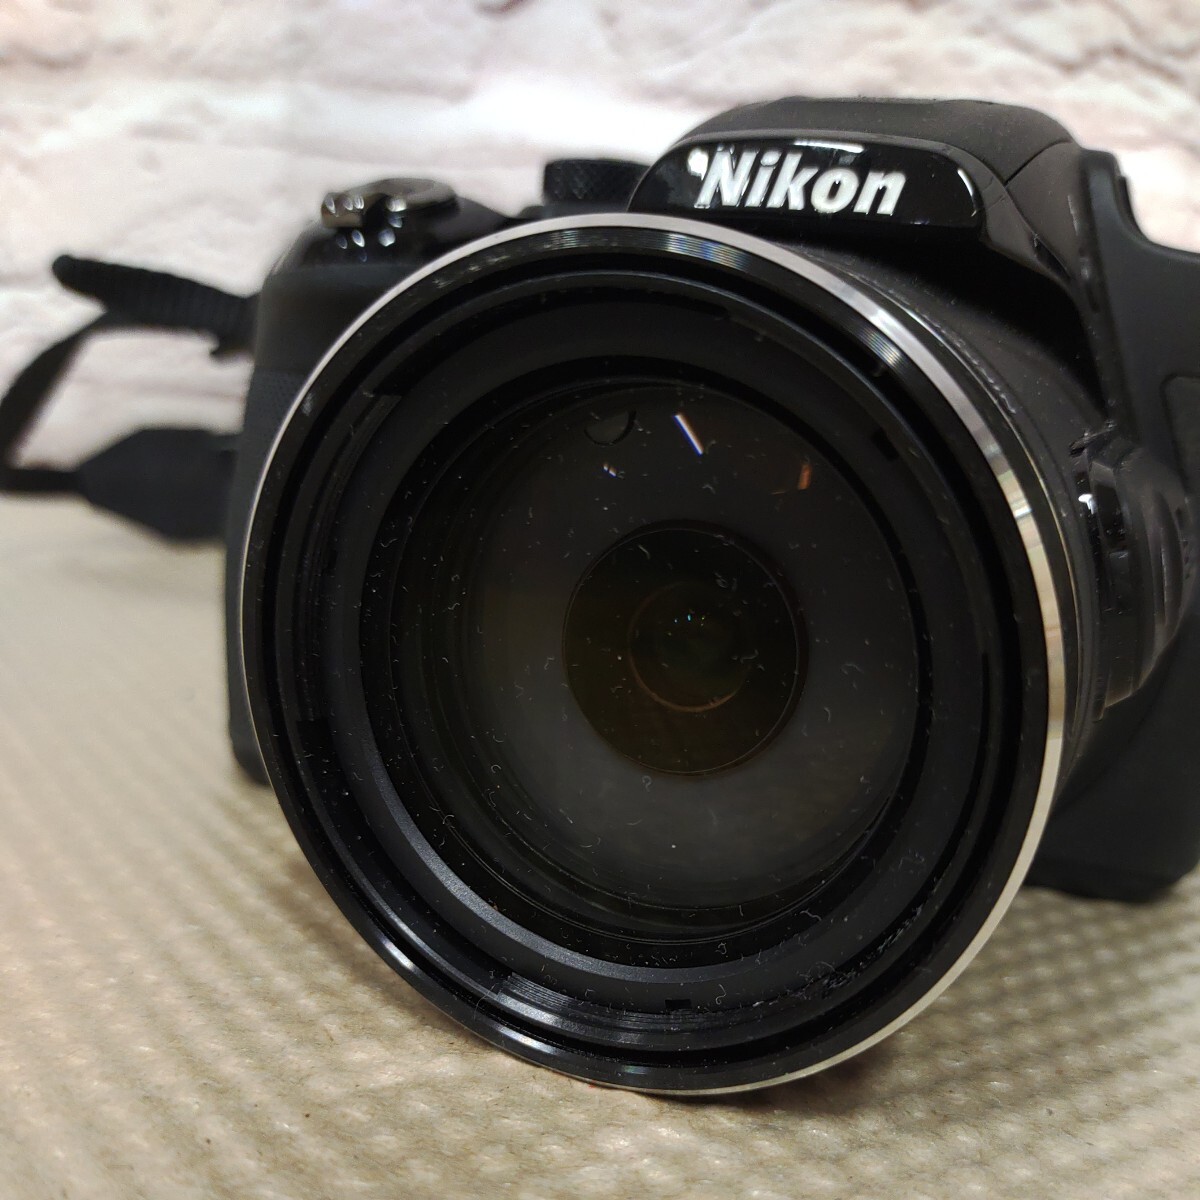 A04197 1 иен ~ Nikon COOLPIX P610 компактный цифровой фотоаппарат темно синий teji цифровая камера Nikon 